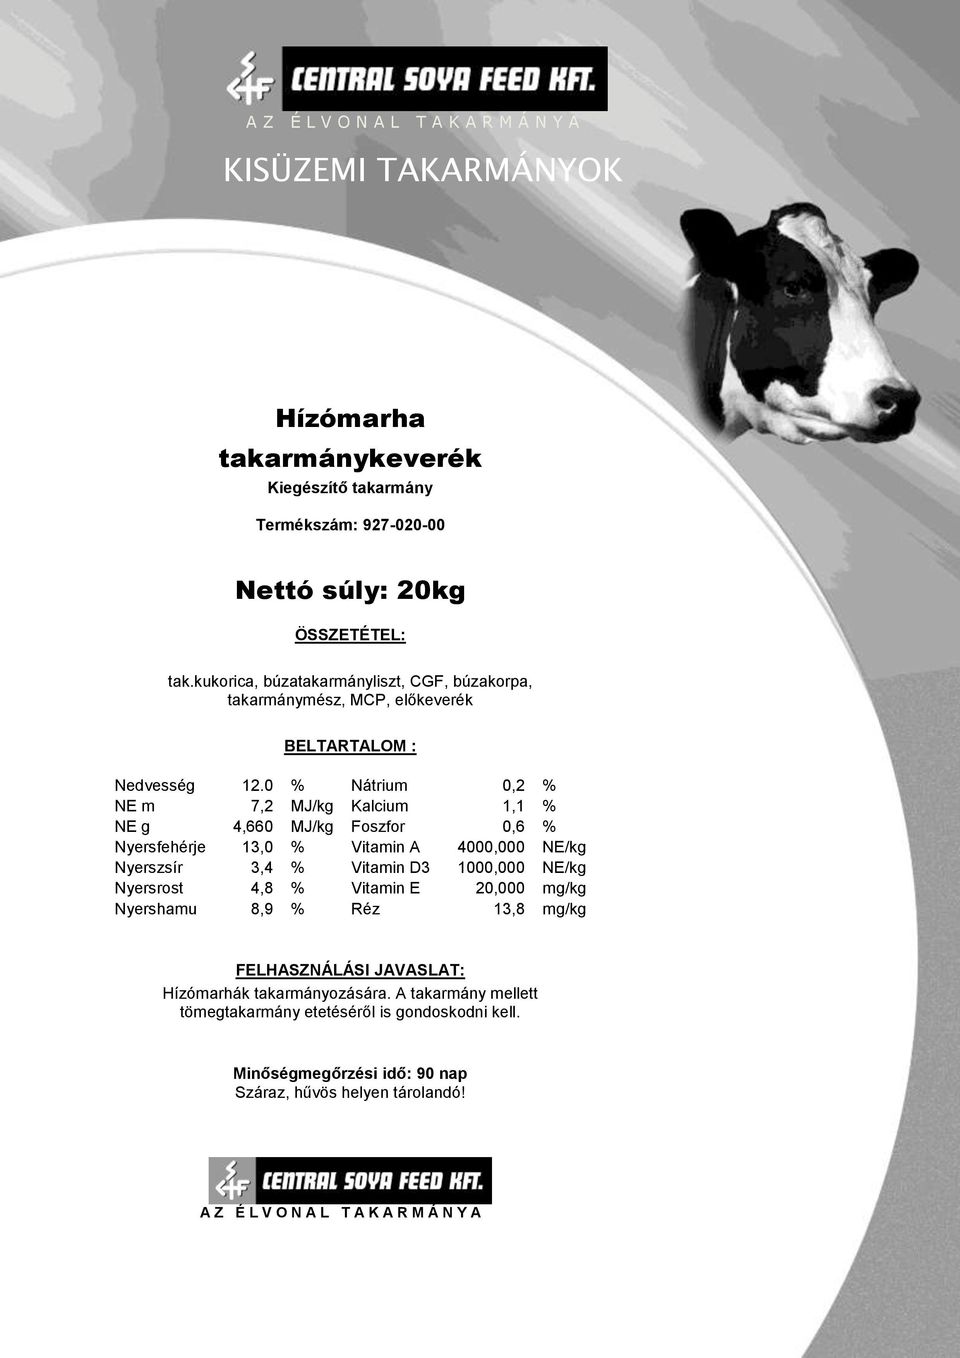 0 % Nátrium 0,2 % NE m 7,2 MJ/kg Kalcium 1,1 % NE g 4,660 MJ/kg Foszfor 0,6 % Nyersfehérje 13,0 % Vitamin A 4000,000